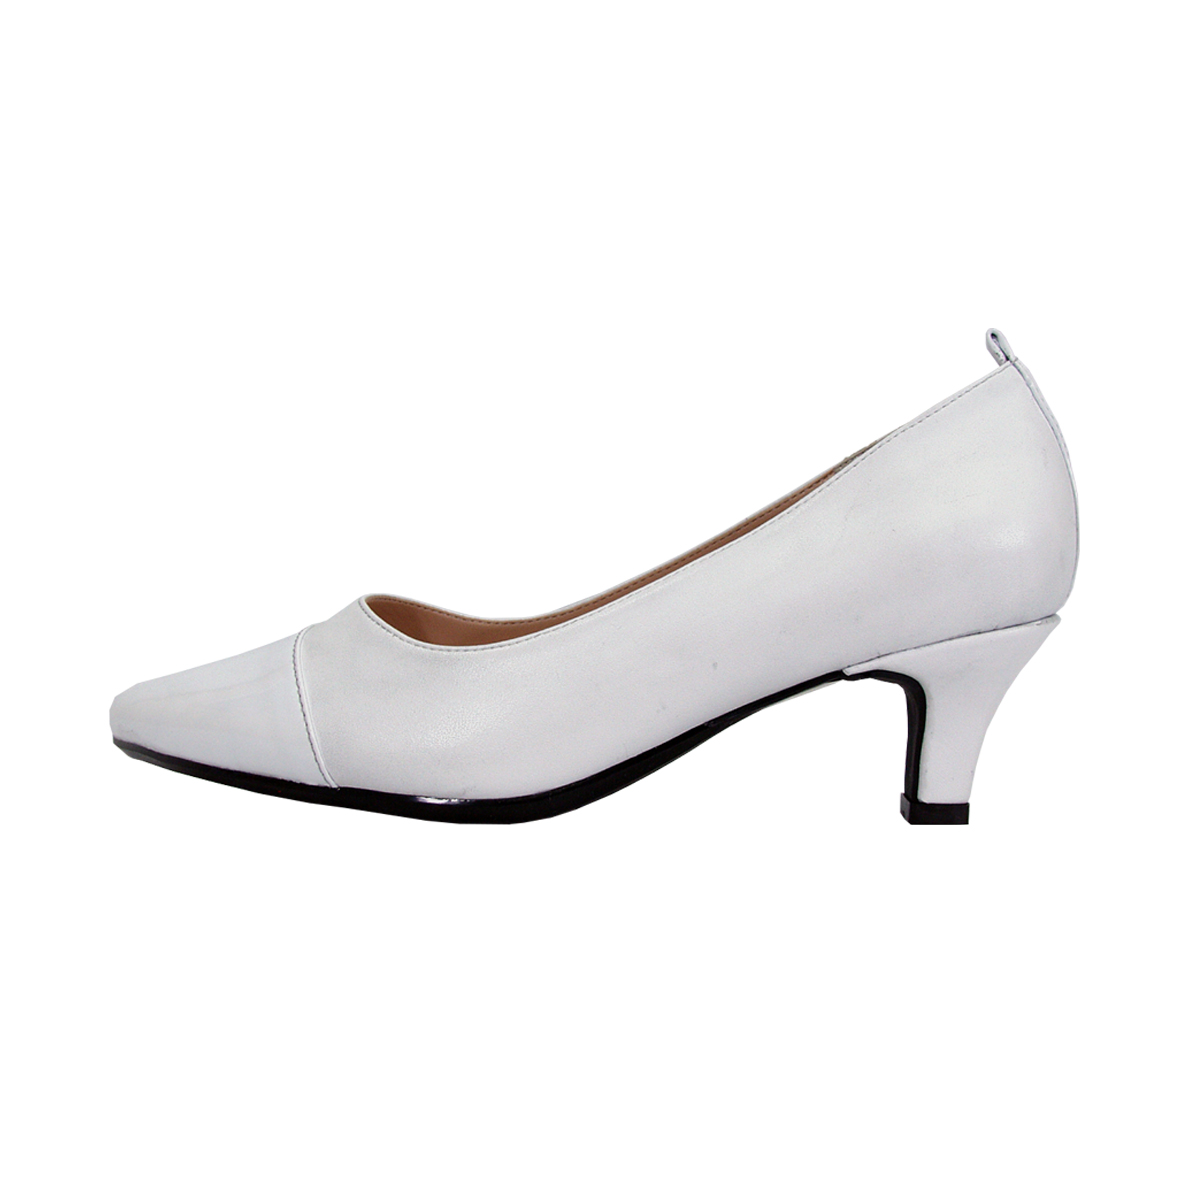 PEERAGE Arlene Women's Wide Width Casual Comfort Mid Heel Dress Shoes for Wedding, Prom, Evening, Work WHITE 7 - image 3 of 6